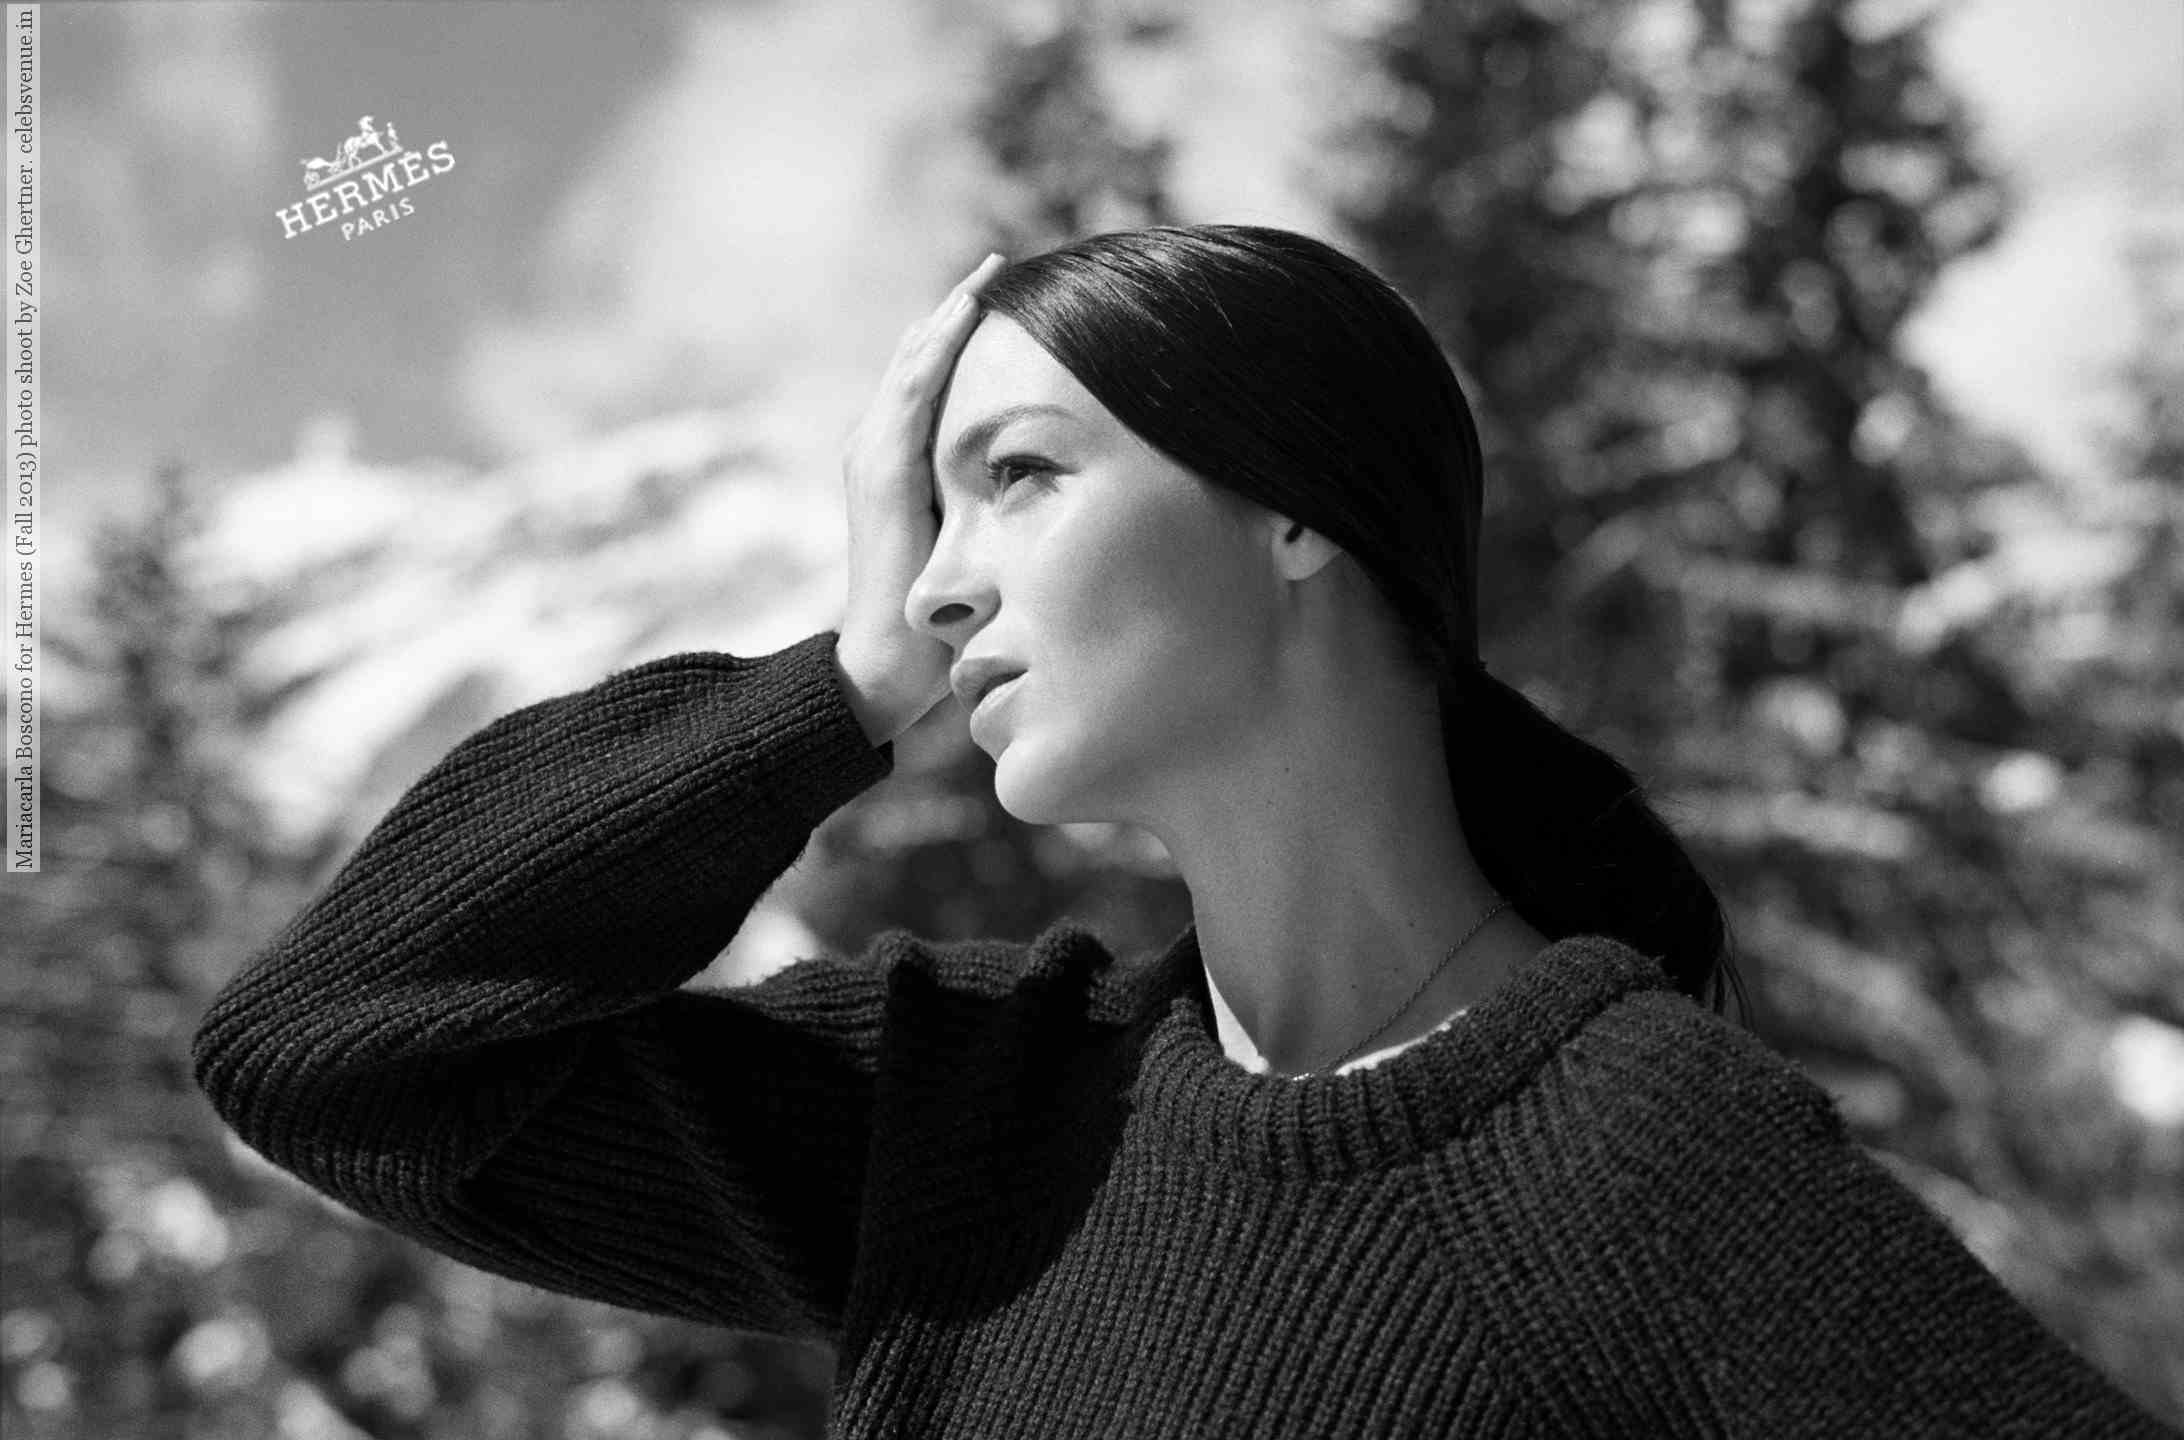 HERMES - VESTIAIRE D'HIVER 2013 
Photographer: Zoe Ghertner
Model: Maria Carla Boscono 
Stylist: Camille Bidault Waddington
Location: Wengen - Switzerland